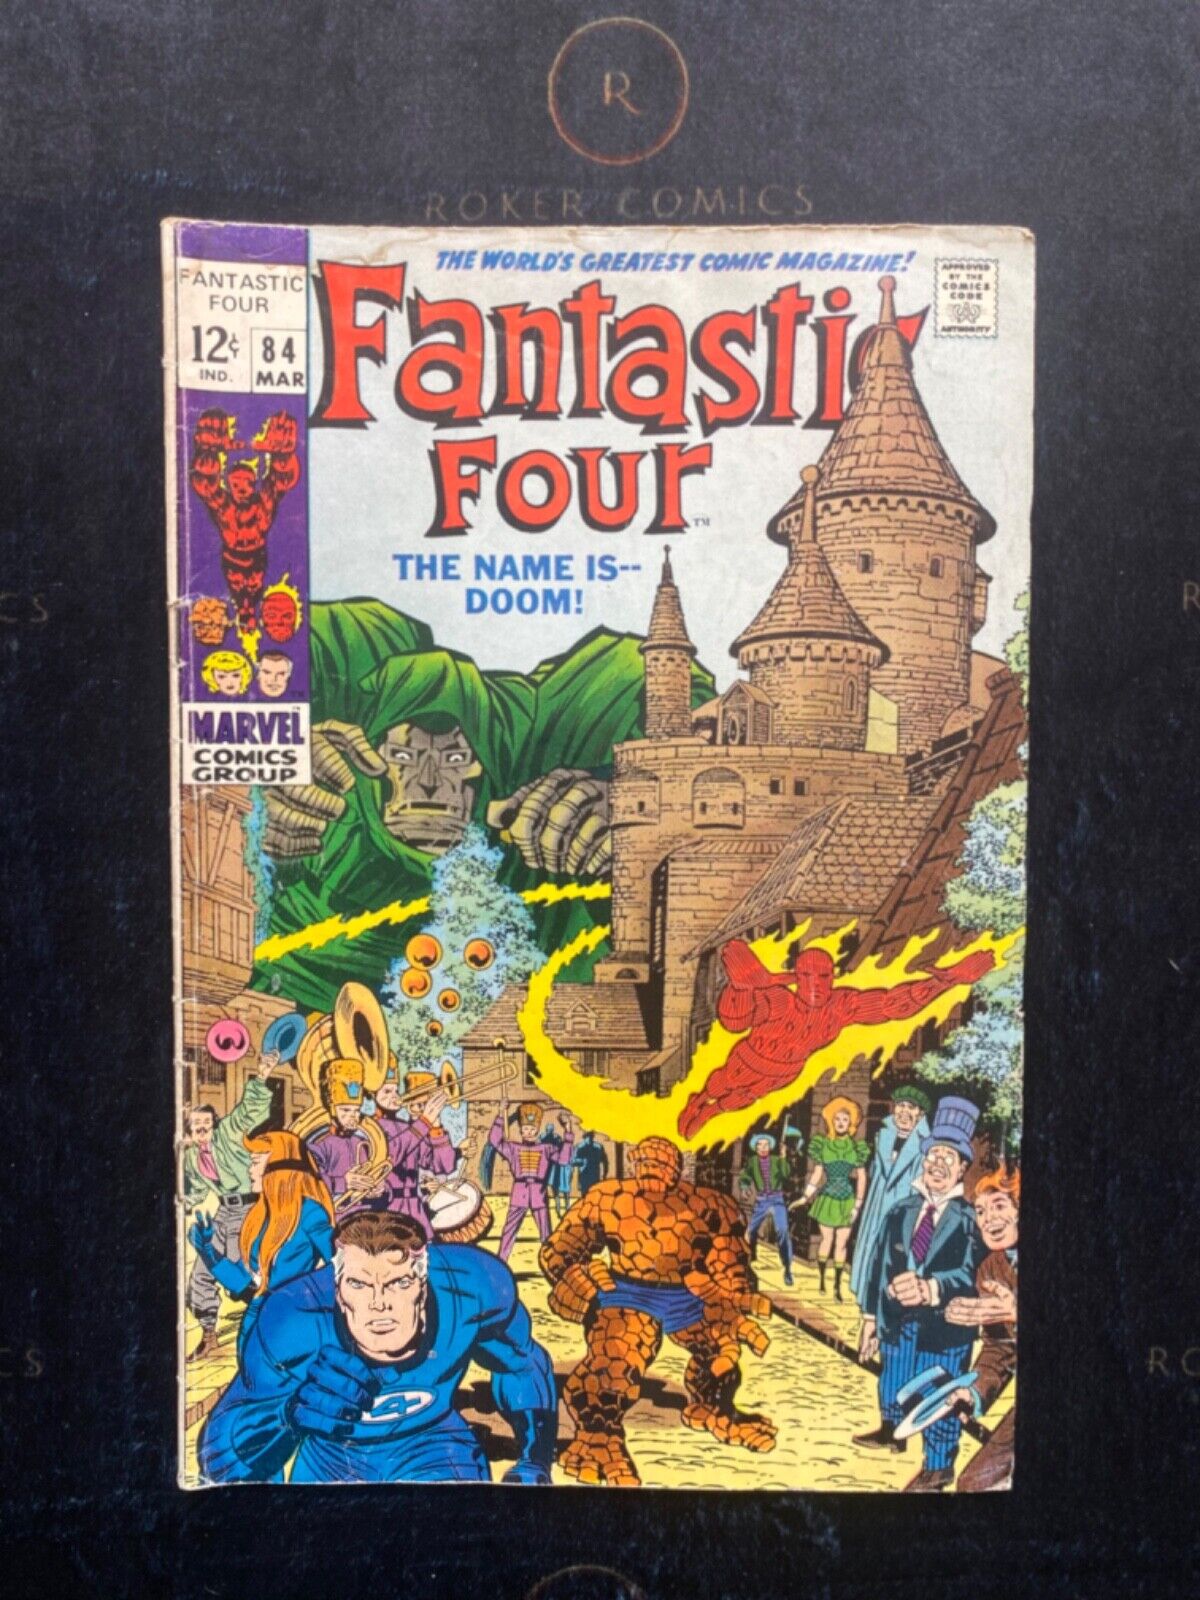 RARE VG+ 1969 Fantastic Four #84